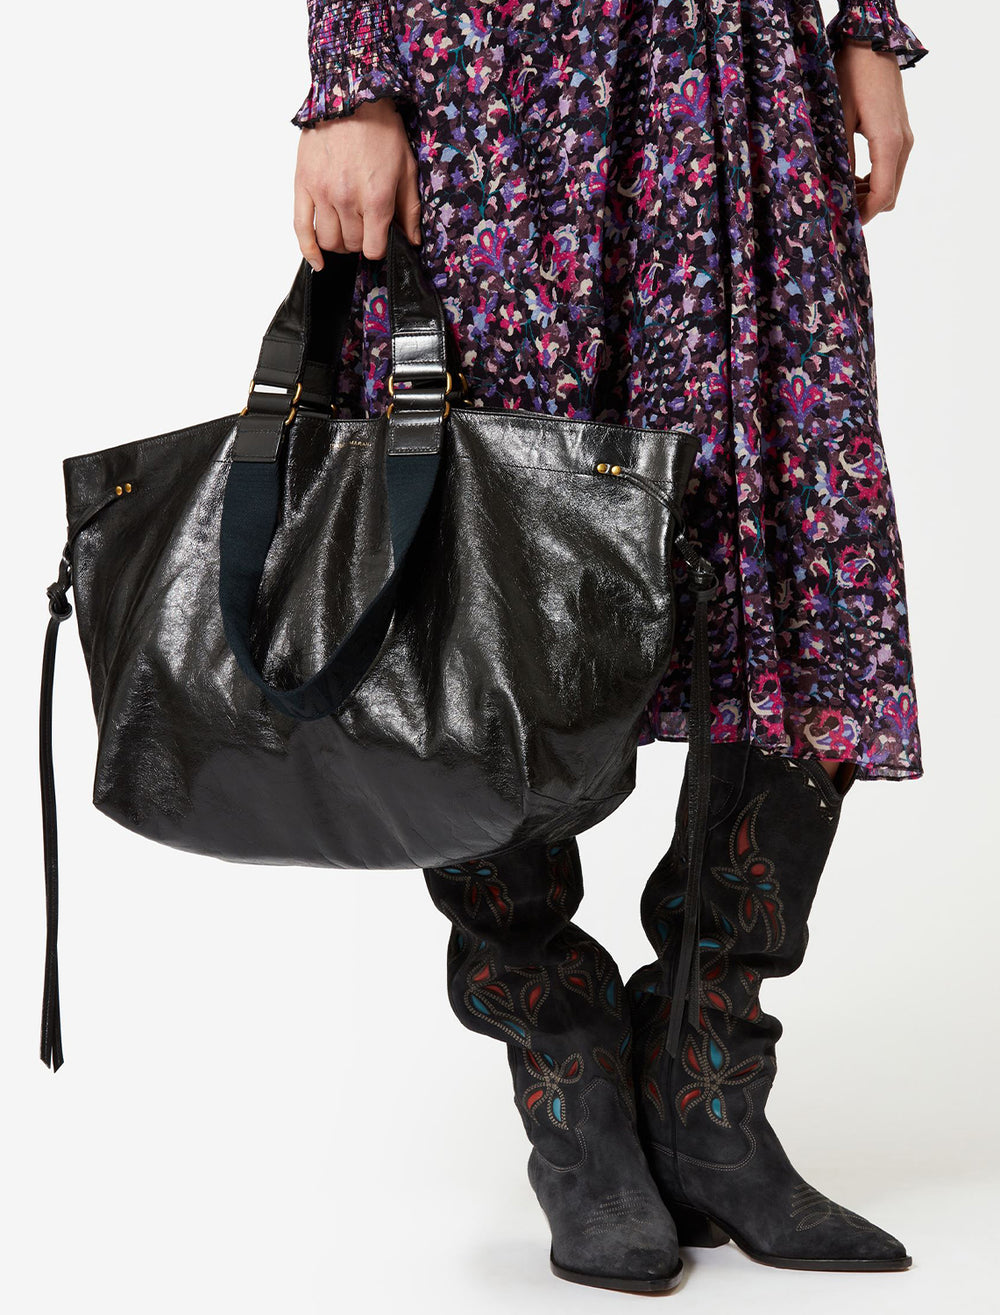 Model carrying Isabel Marant Etoile's wardy bag in black.